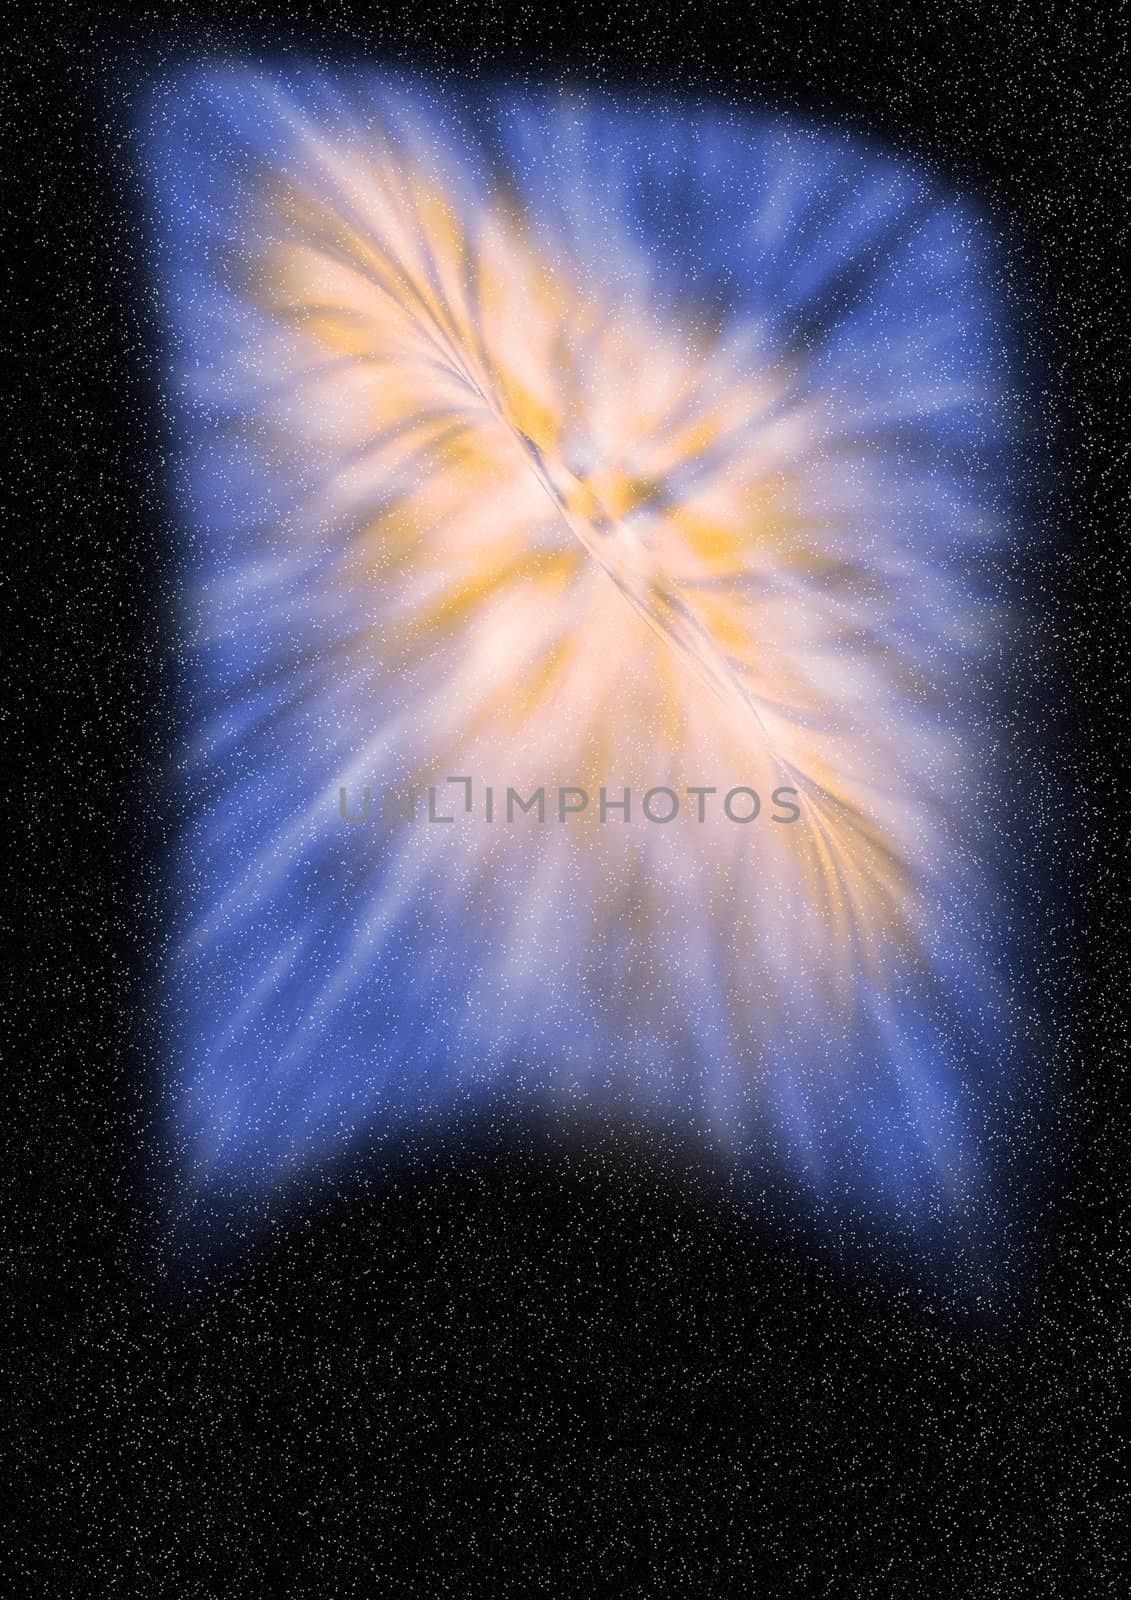 Being shone nebula by richter1910